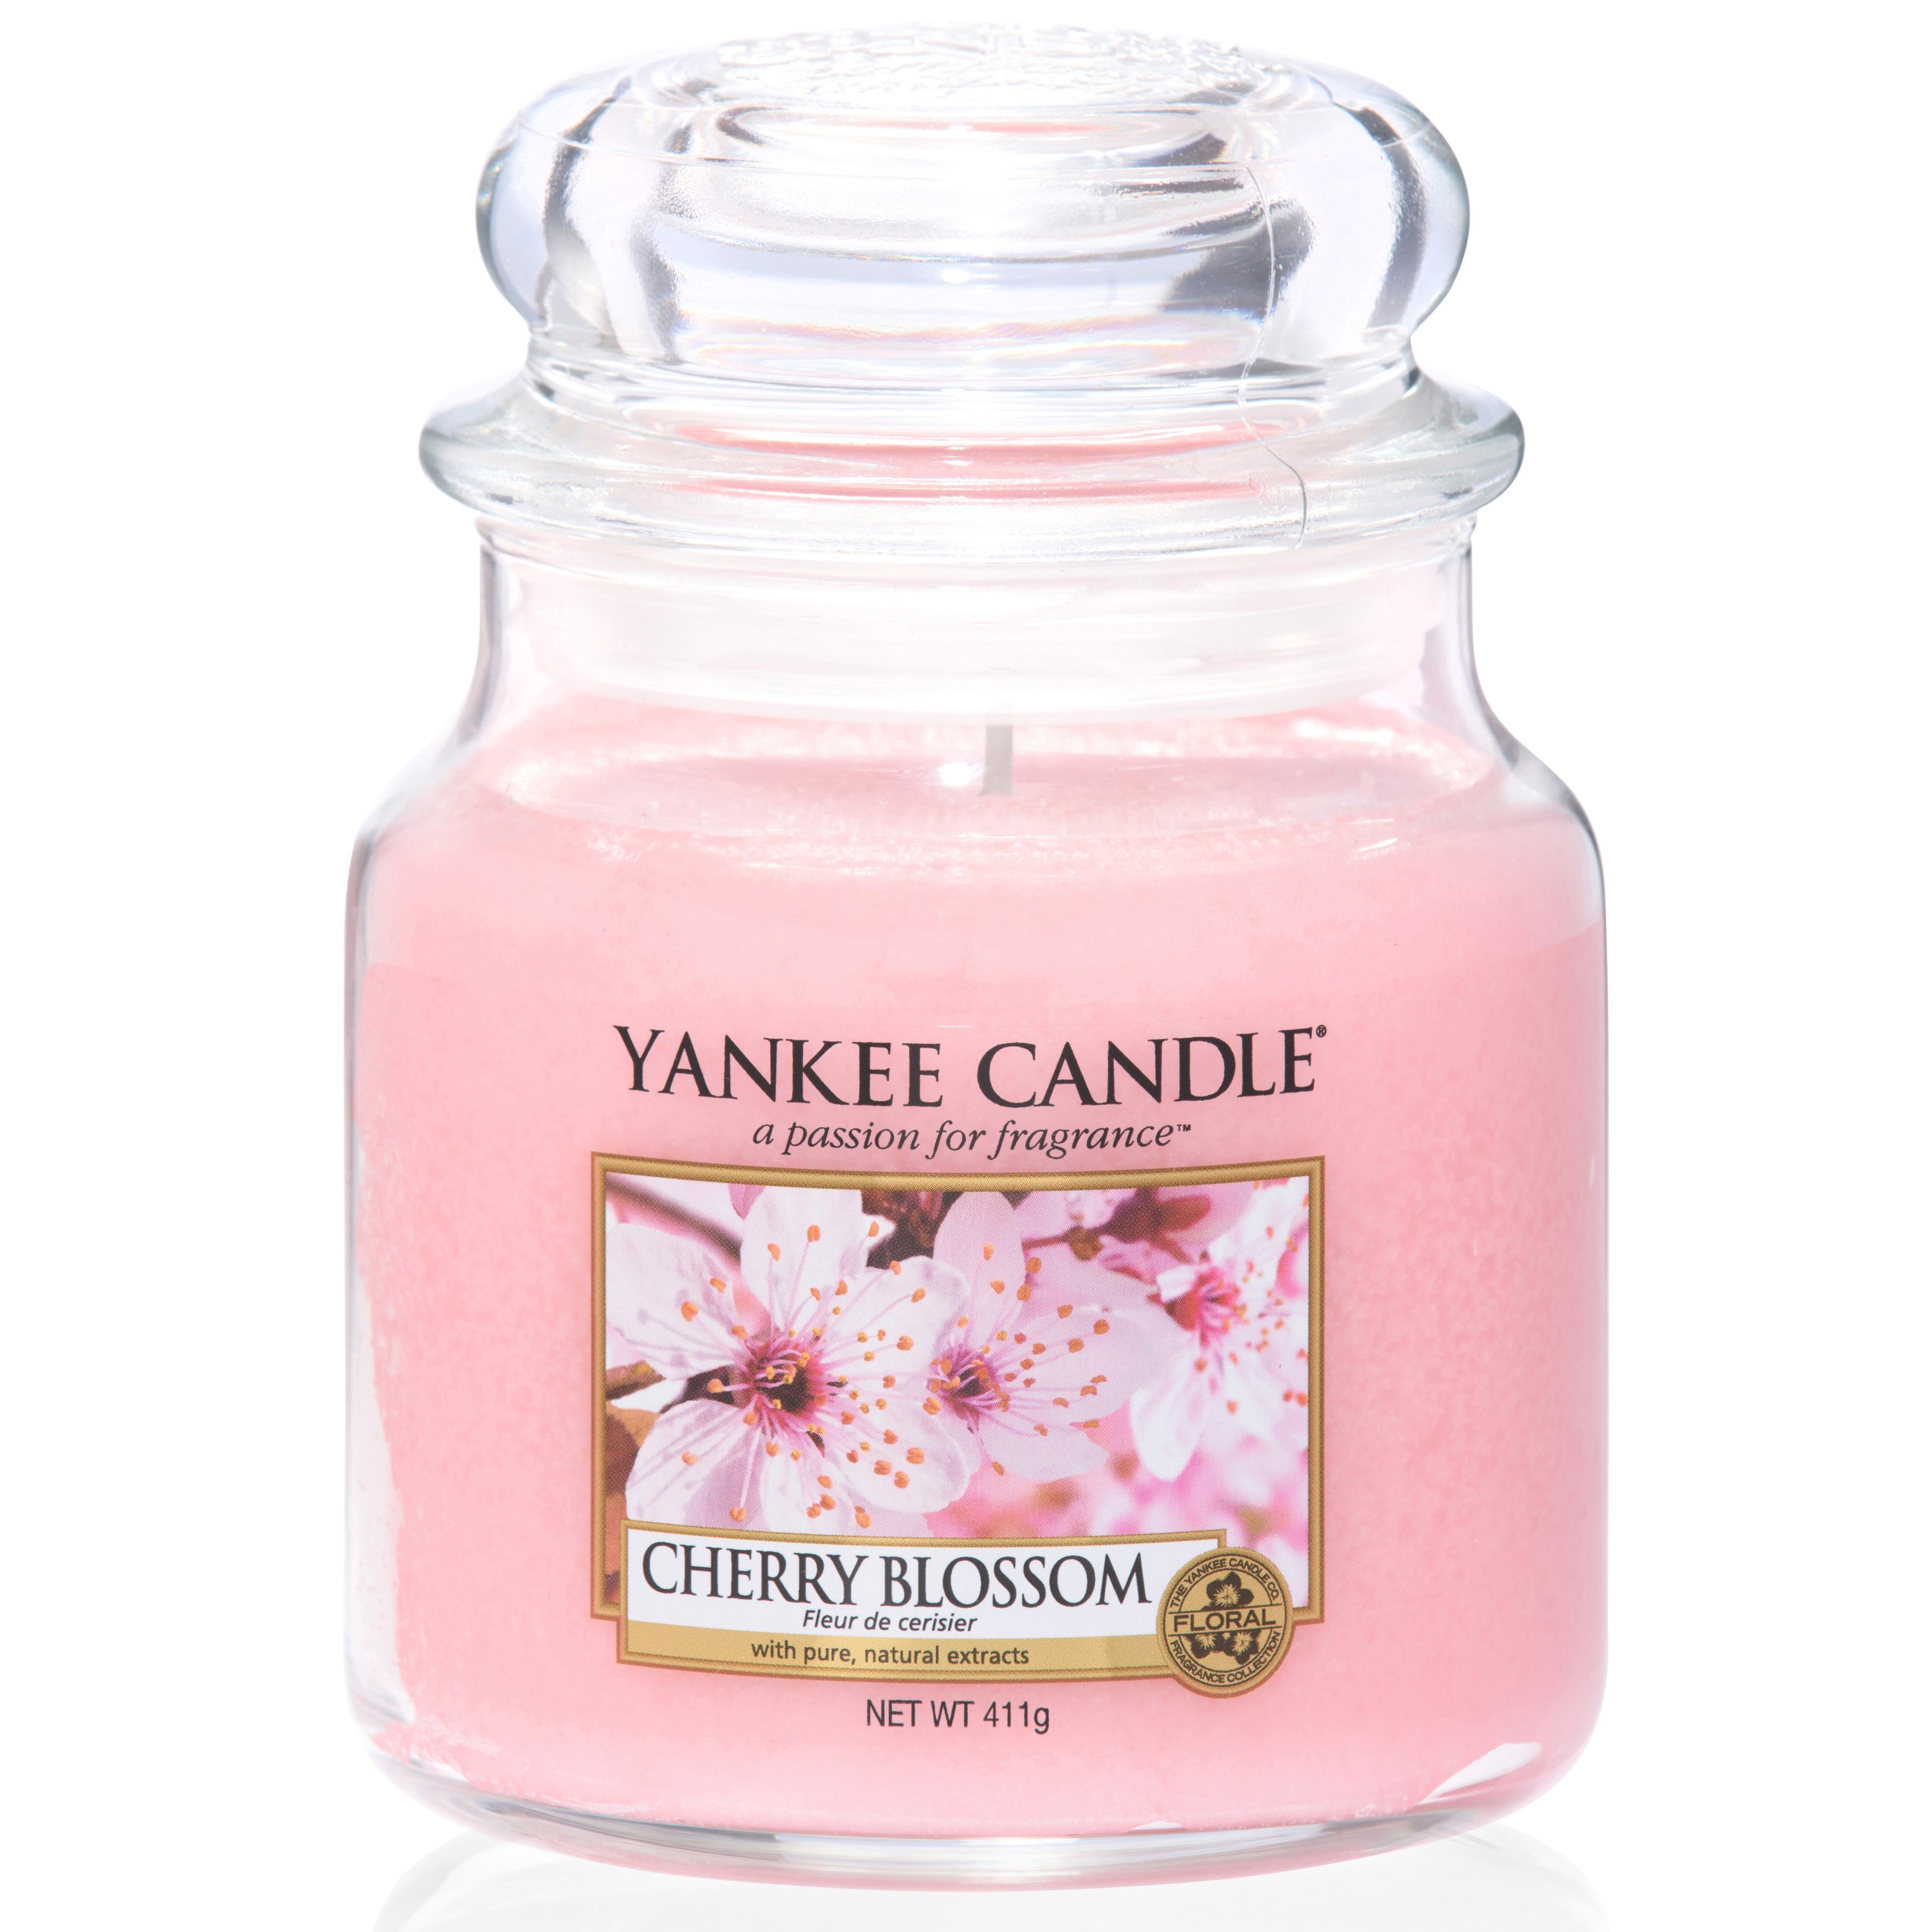 Yankee Candle Classic Medium Jar Cherry Blossom Candle 411g